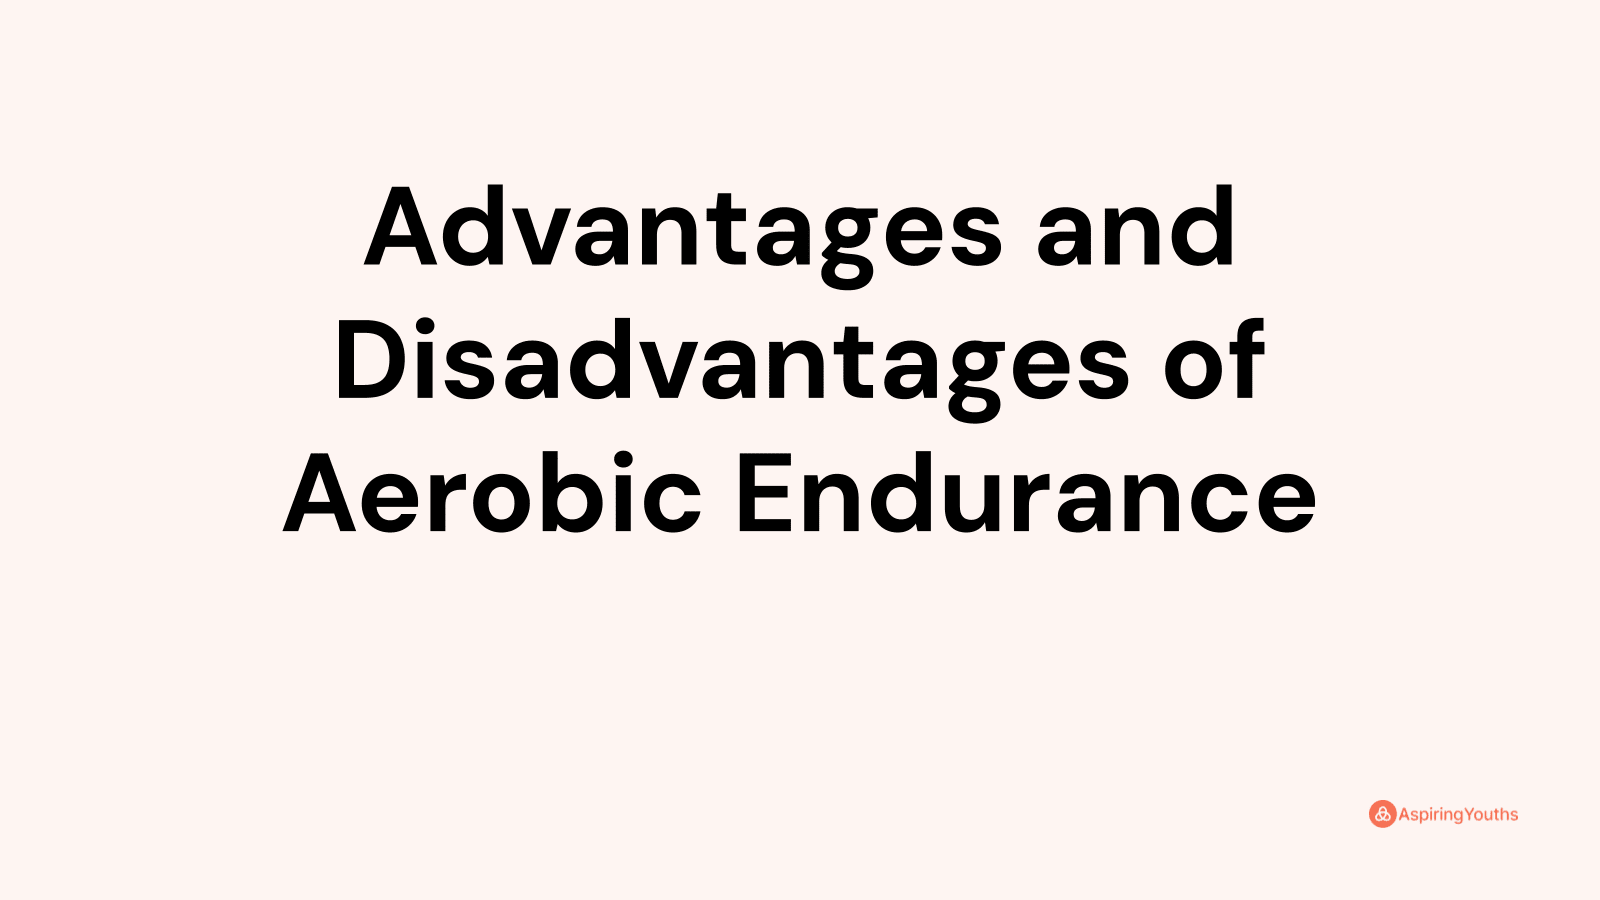 Advantages and disadvantages of Aerobic Endurance